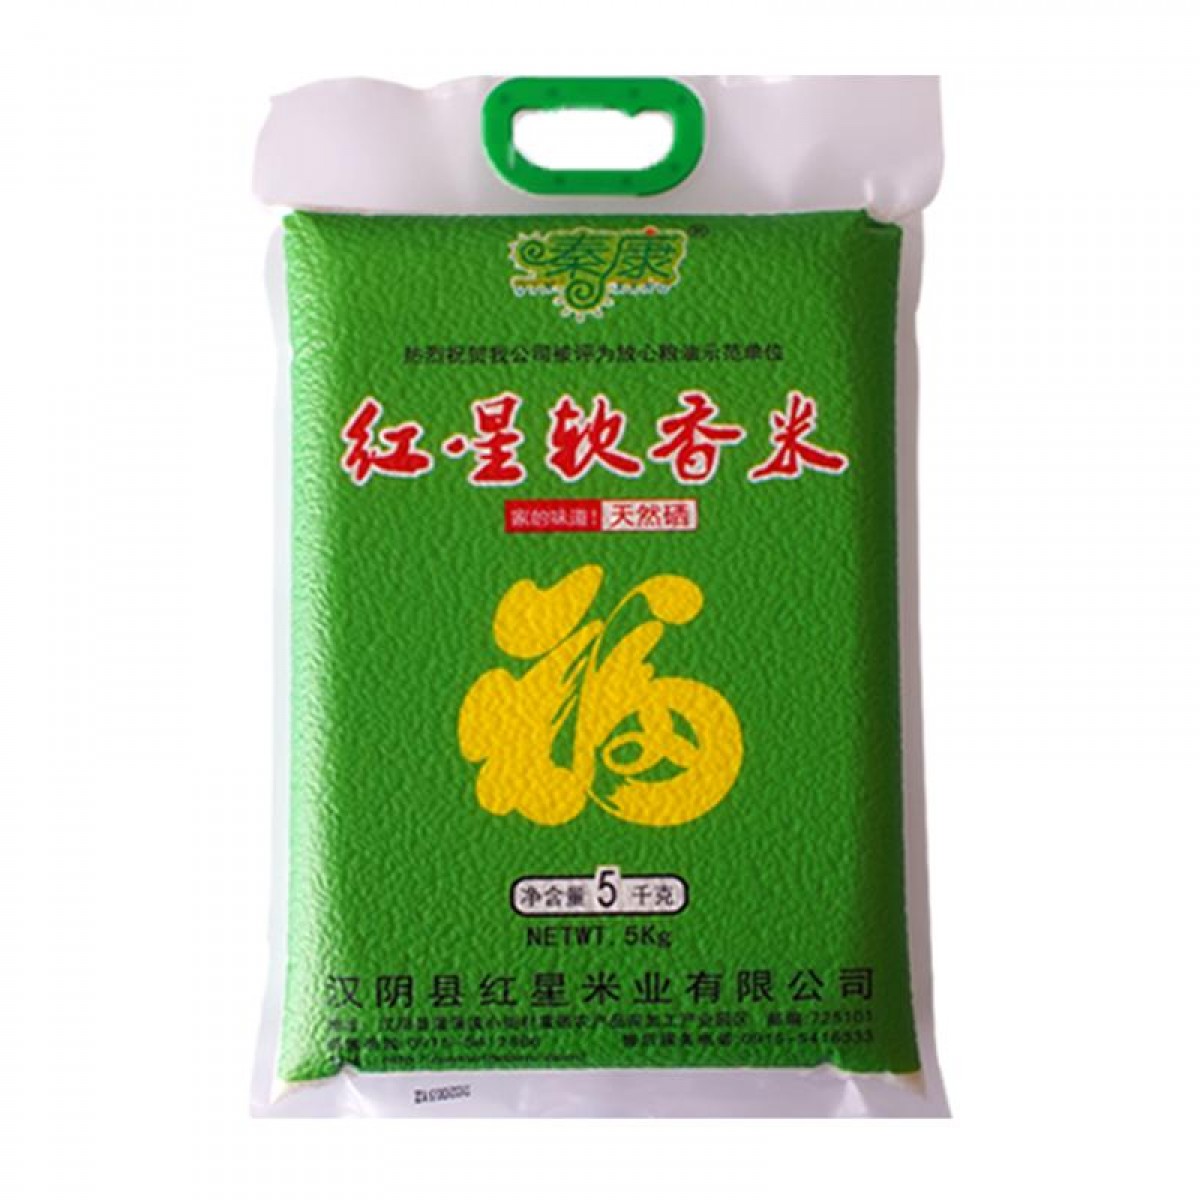 【GO汉阴】秦康红星软香米5kg/袋 真空包装